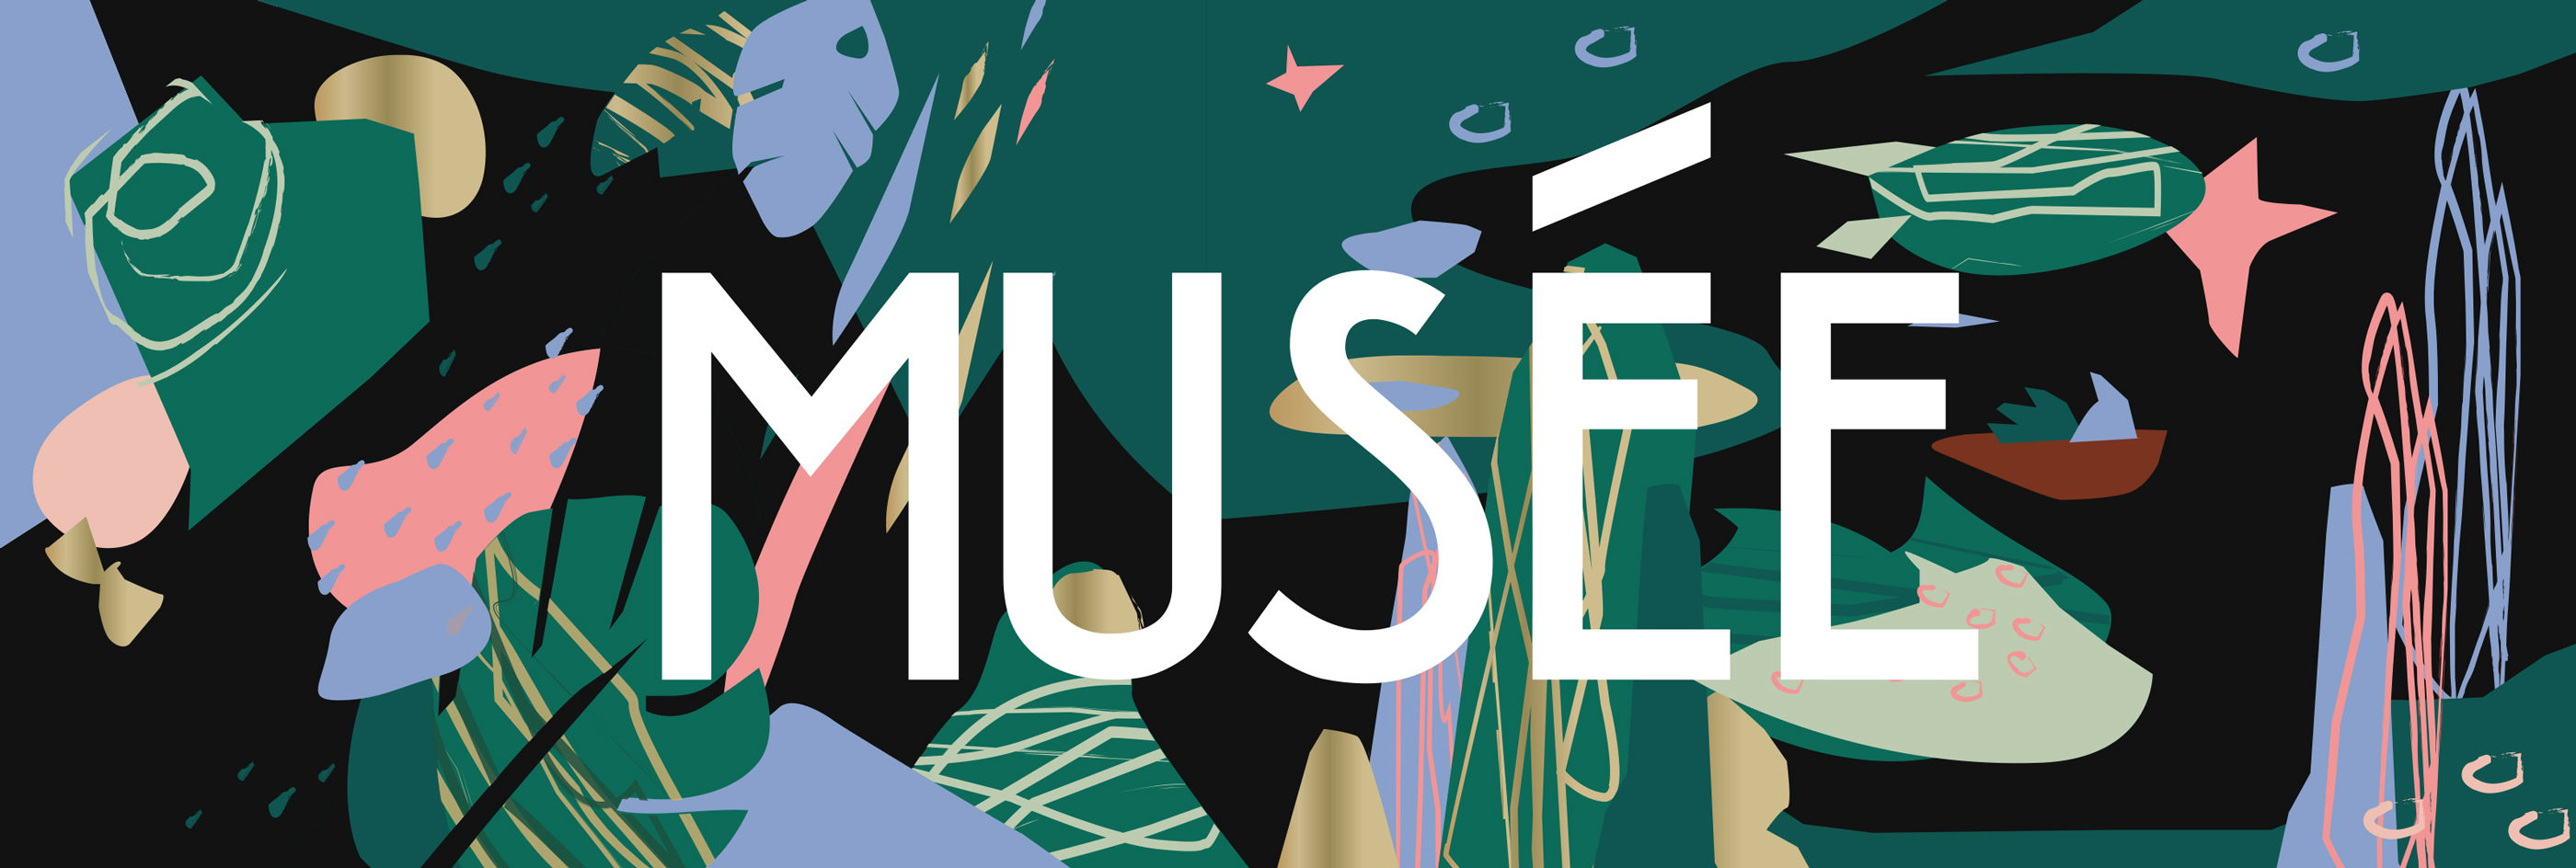 MUSE Design Winners - MUSEE Luxury retail branding